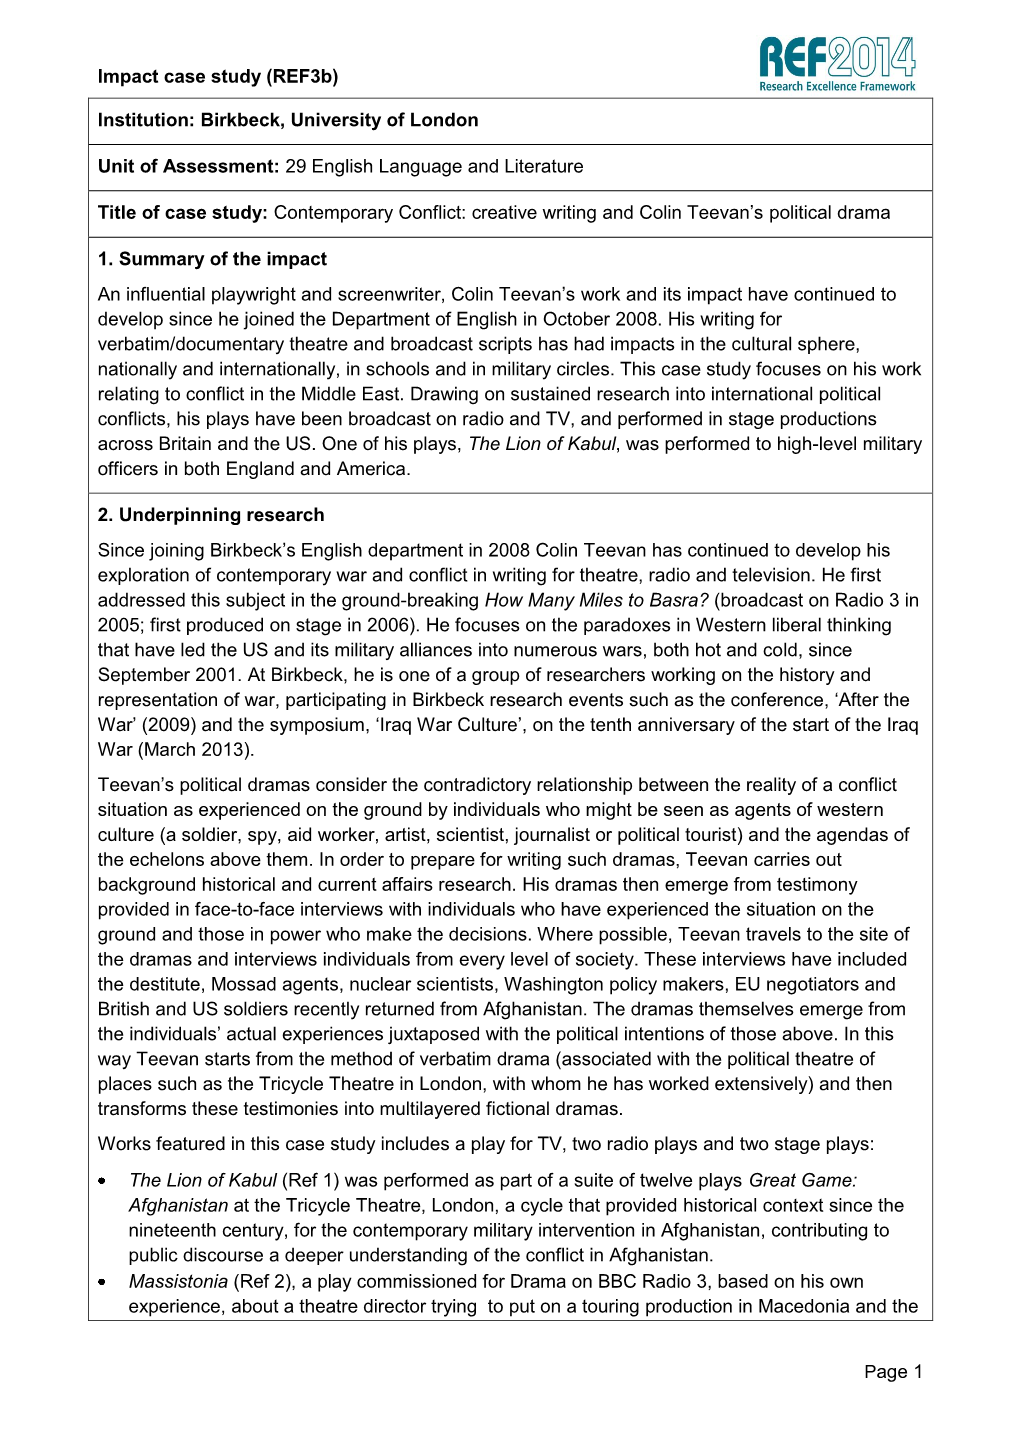 Impact Case Study (Ref3b) Page 1 Institution: Birkbeck, University of London Unit of Assessment: 29 English Language and Literat